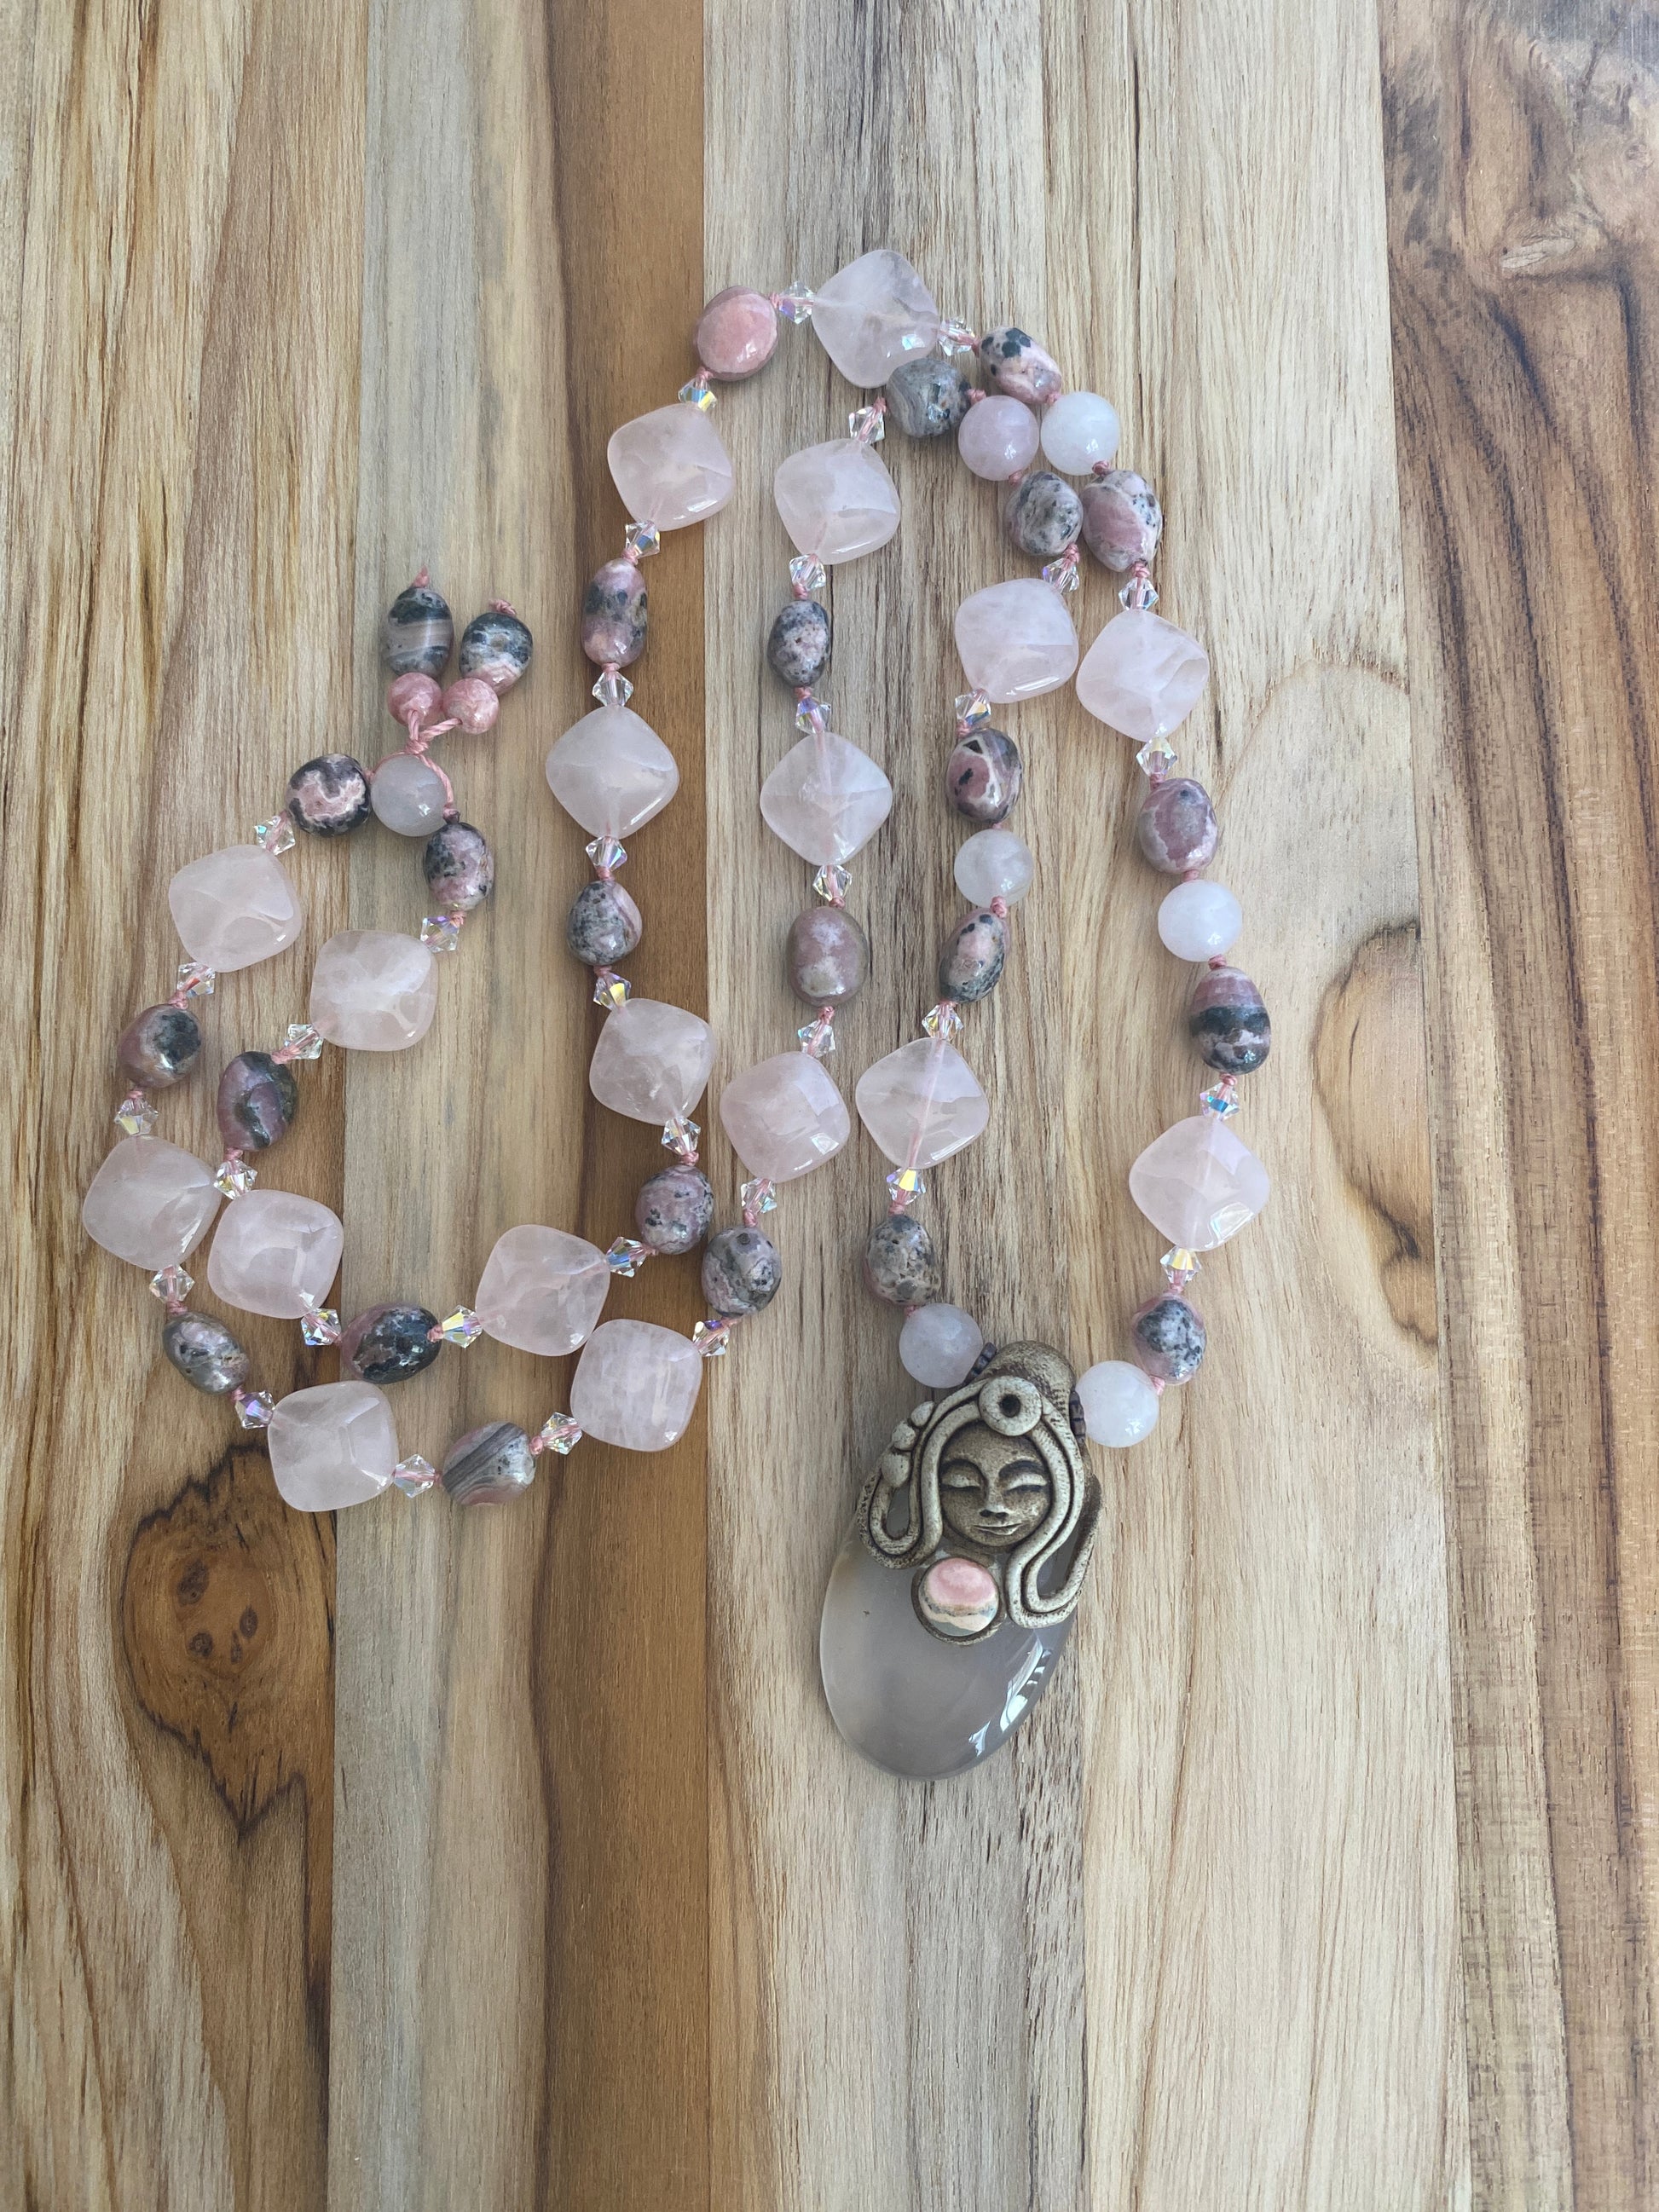 28" Long Polymer Clay and Onyx Goddess Pendant Necklace with Rose Quartz, Rhodonite & Swarovski Crystal Beads - My Urban Gems